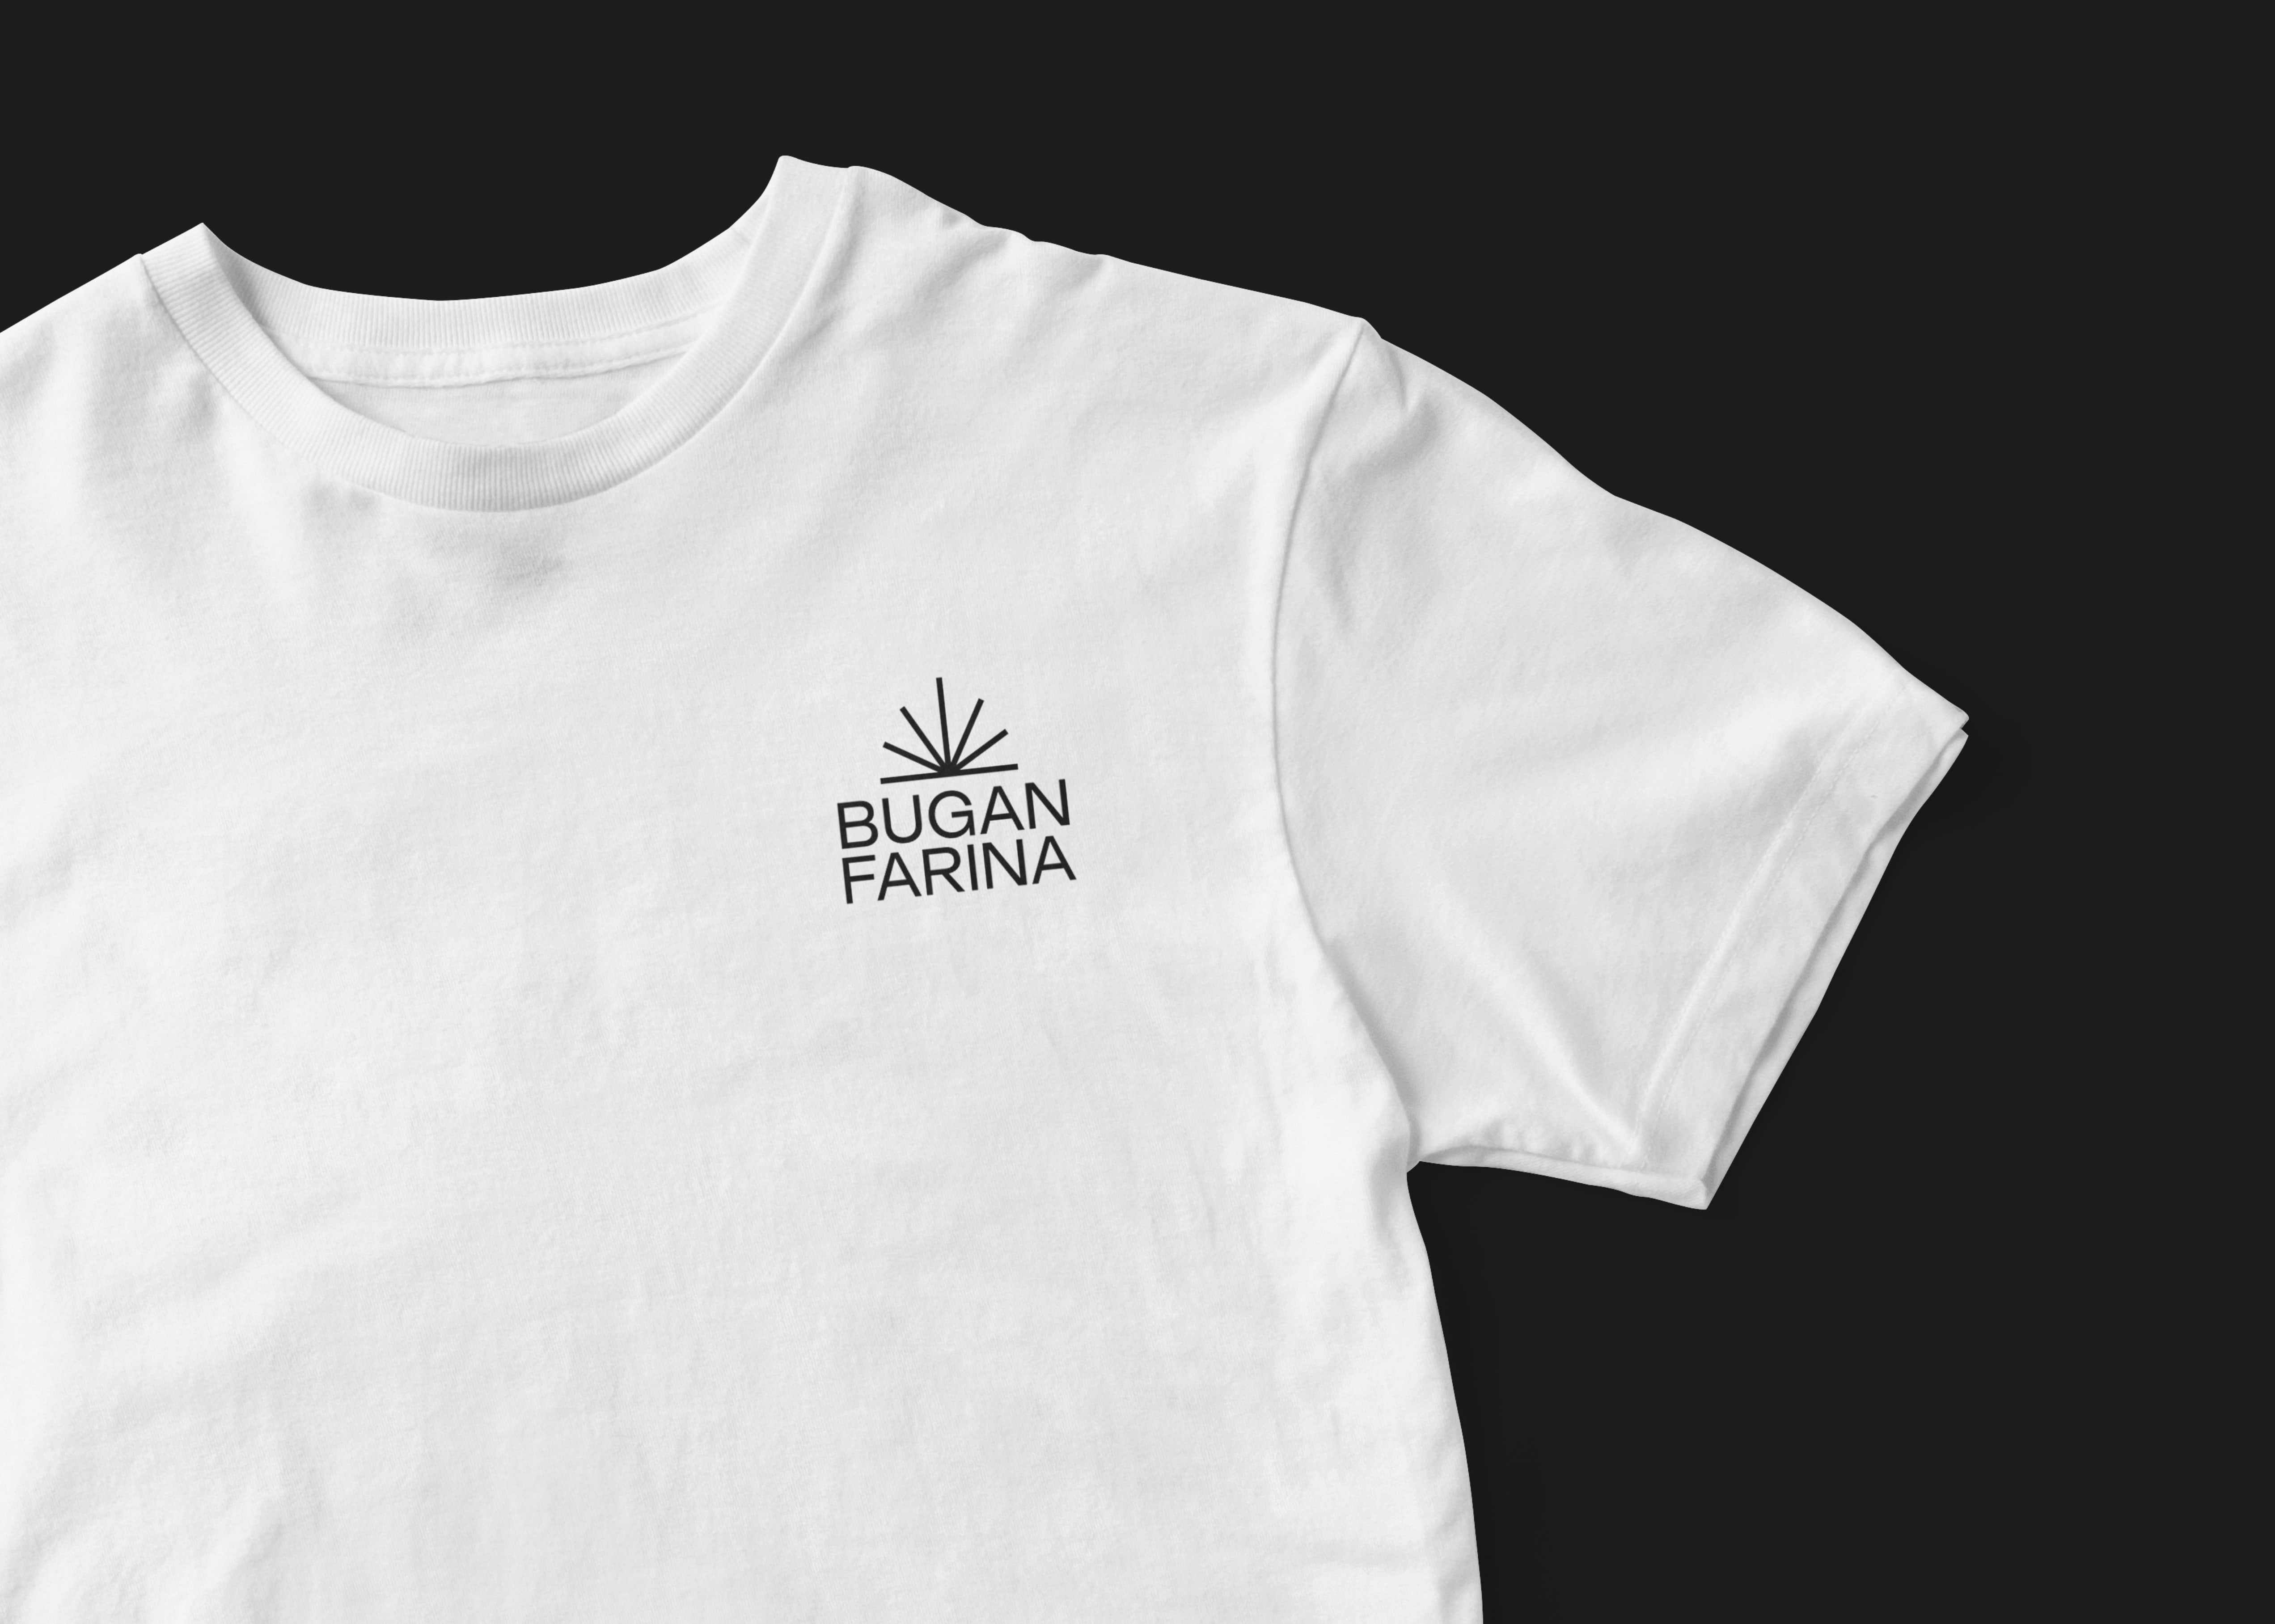 T-shirt bugan farina